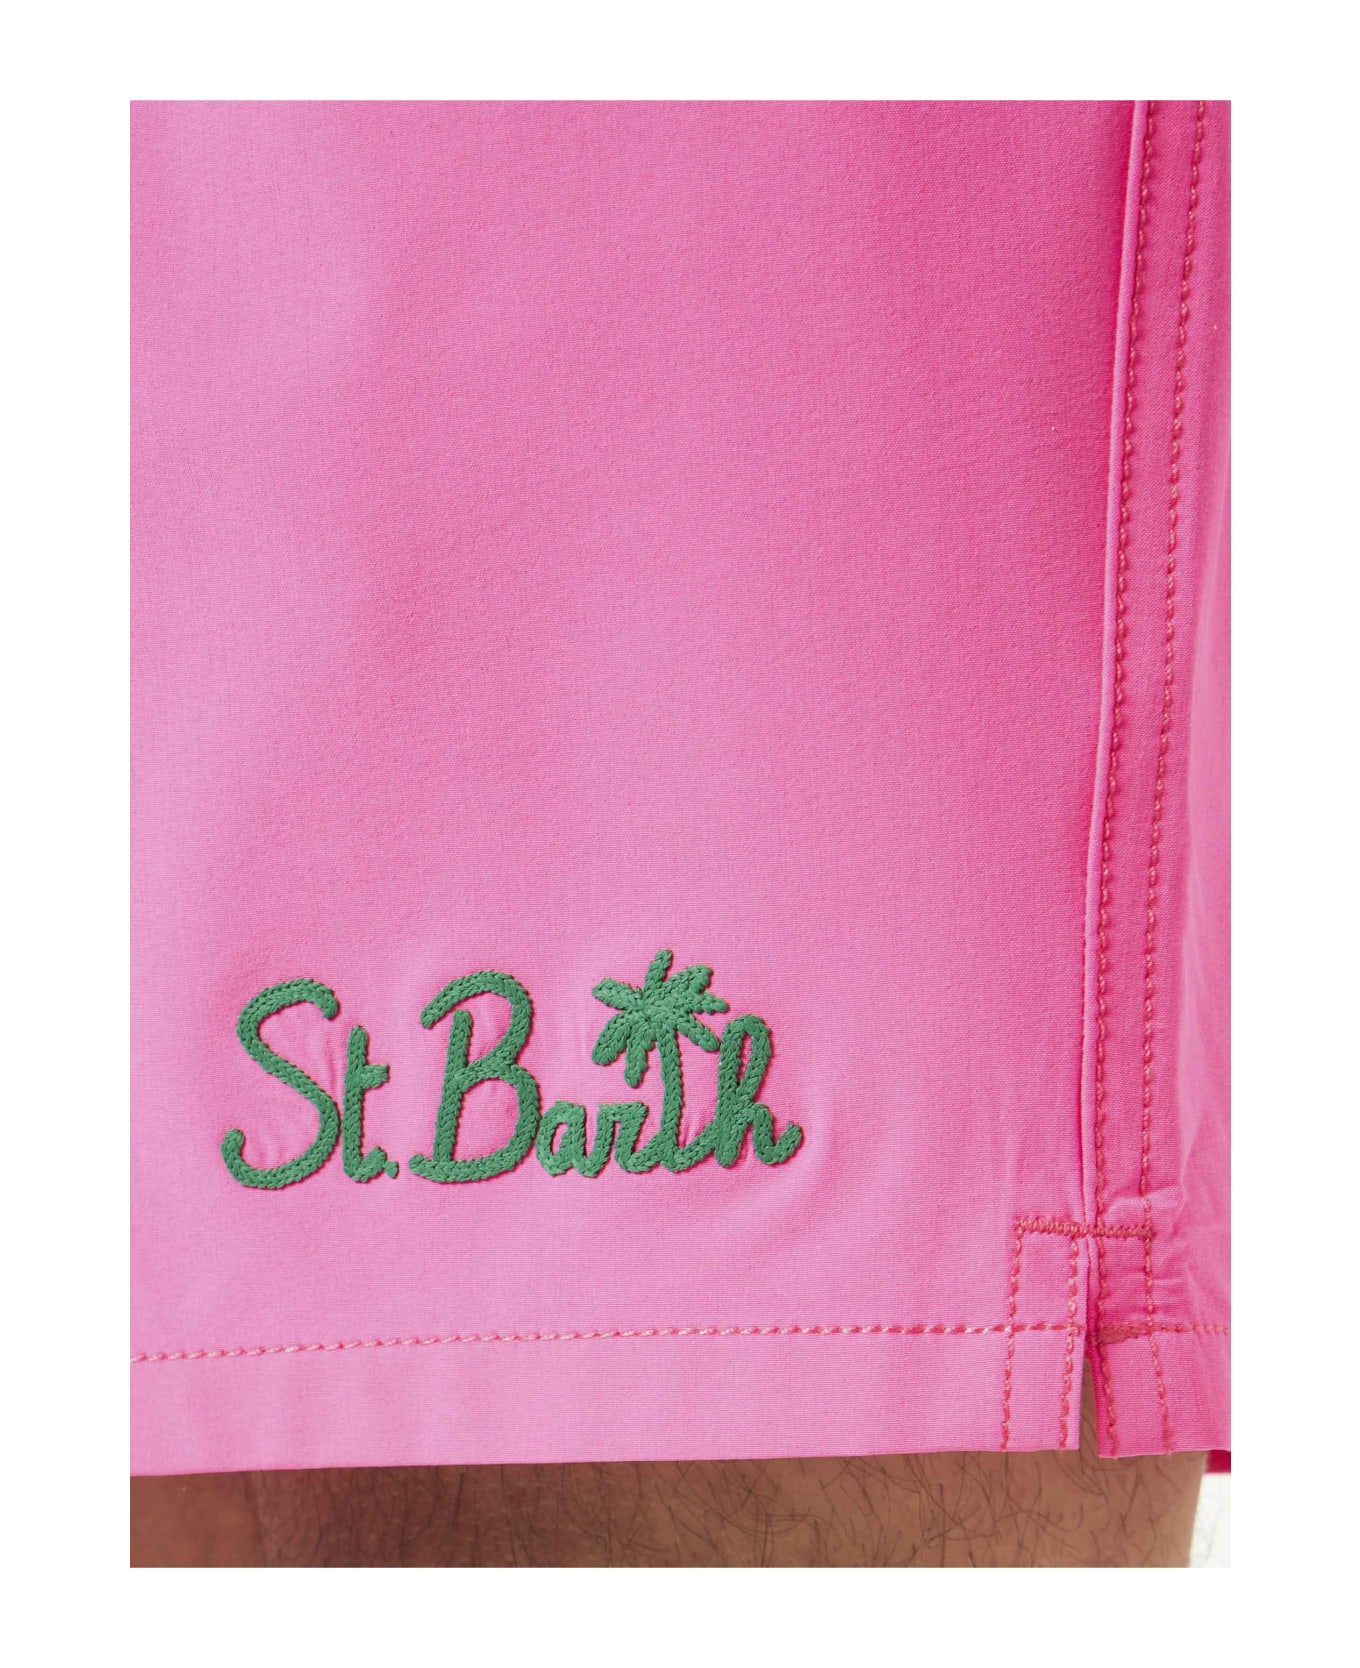 MC2 Saint Barth Man Fluo Pink Comfort Swim Shorts - FLUO